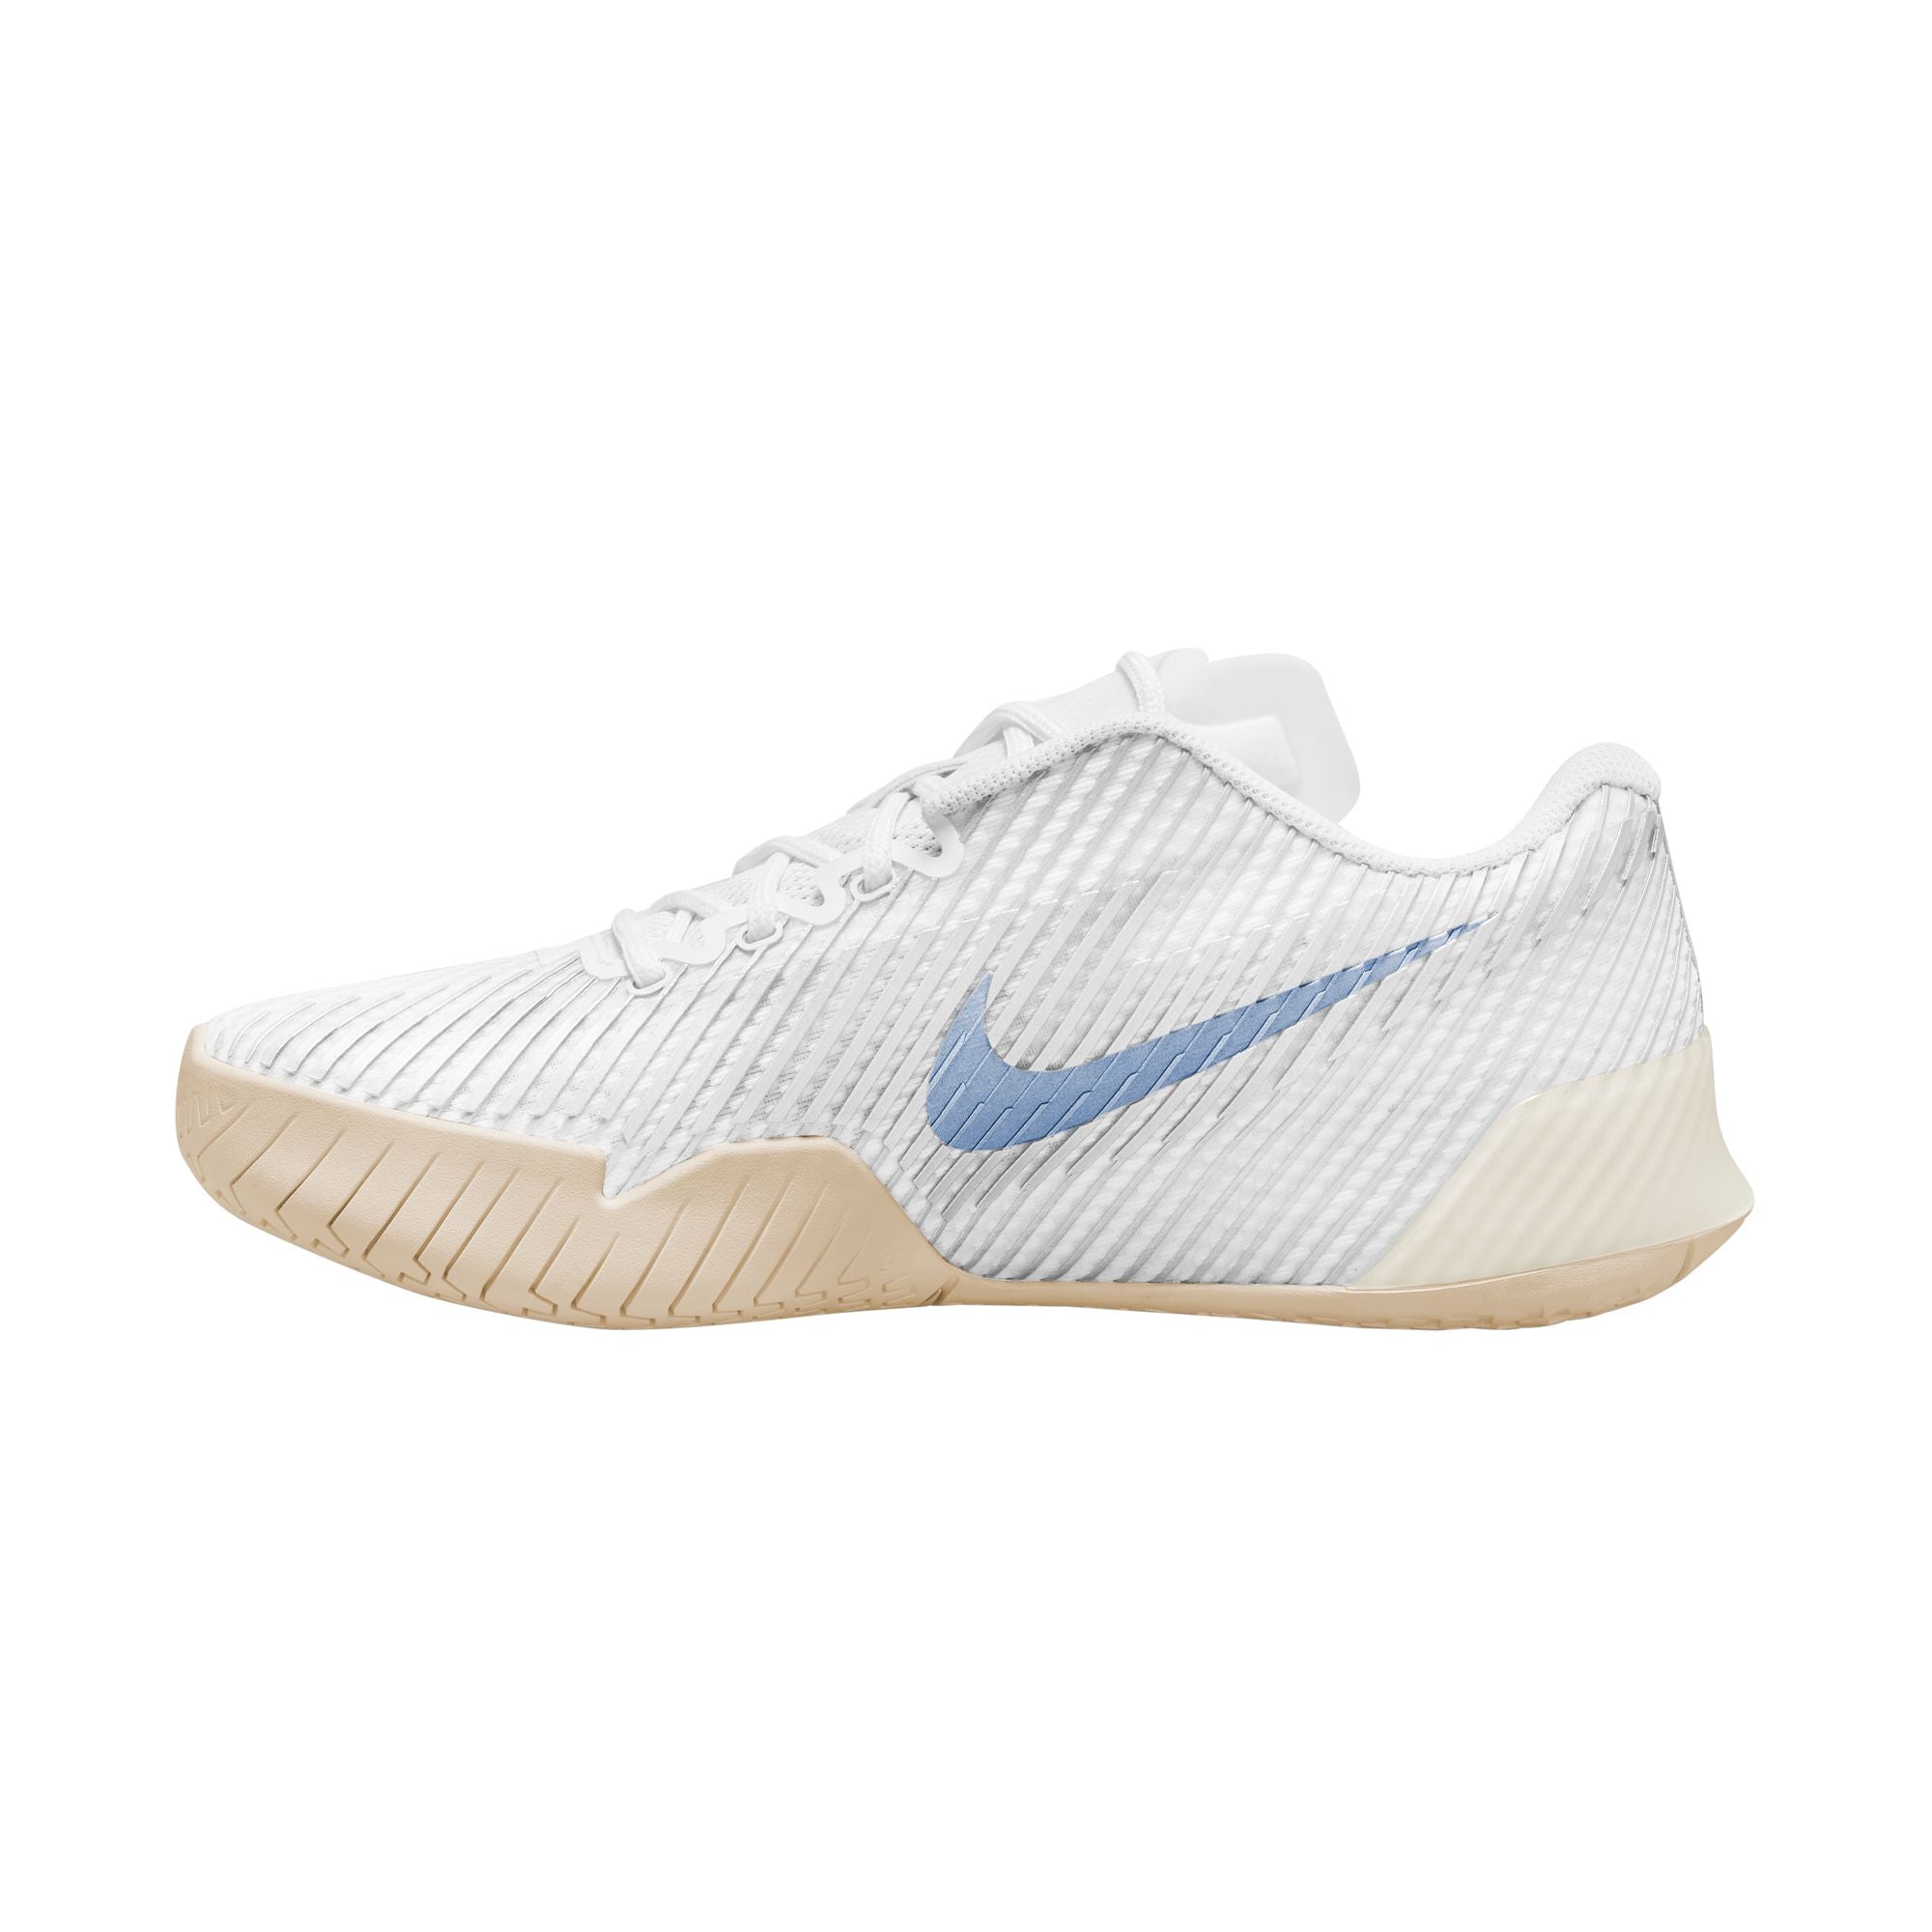 Nike Court Air Zoom Vapor 11 (Women's) - White/Light Blue/Sail Gum/Light Brown